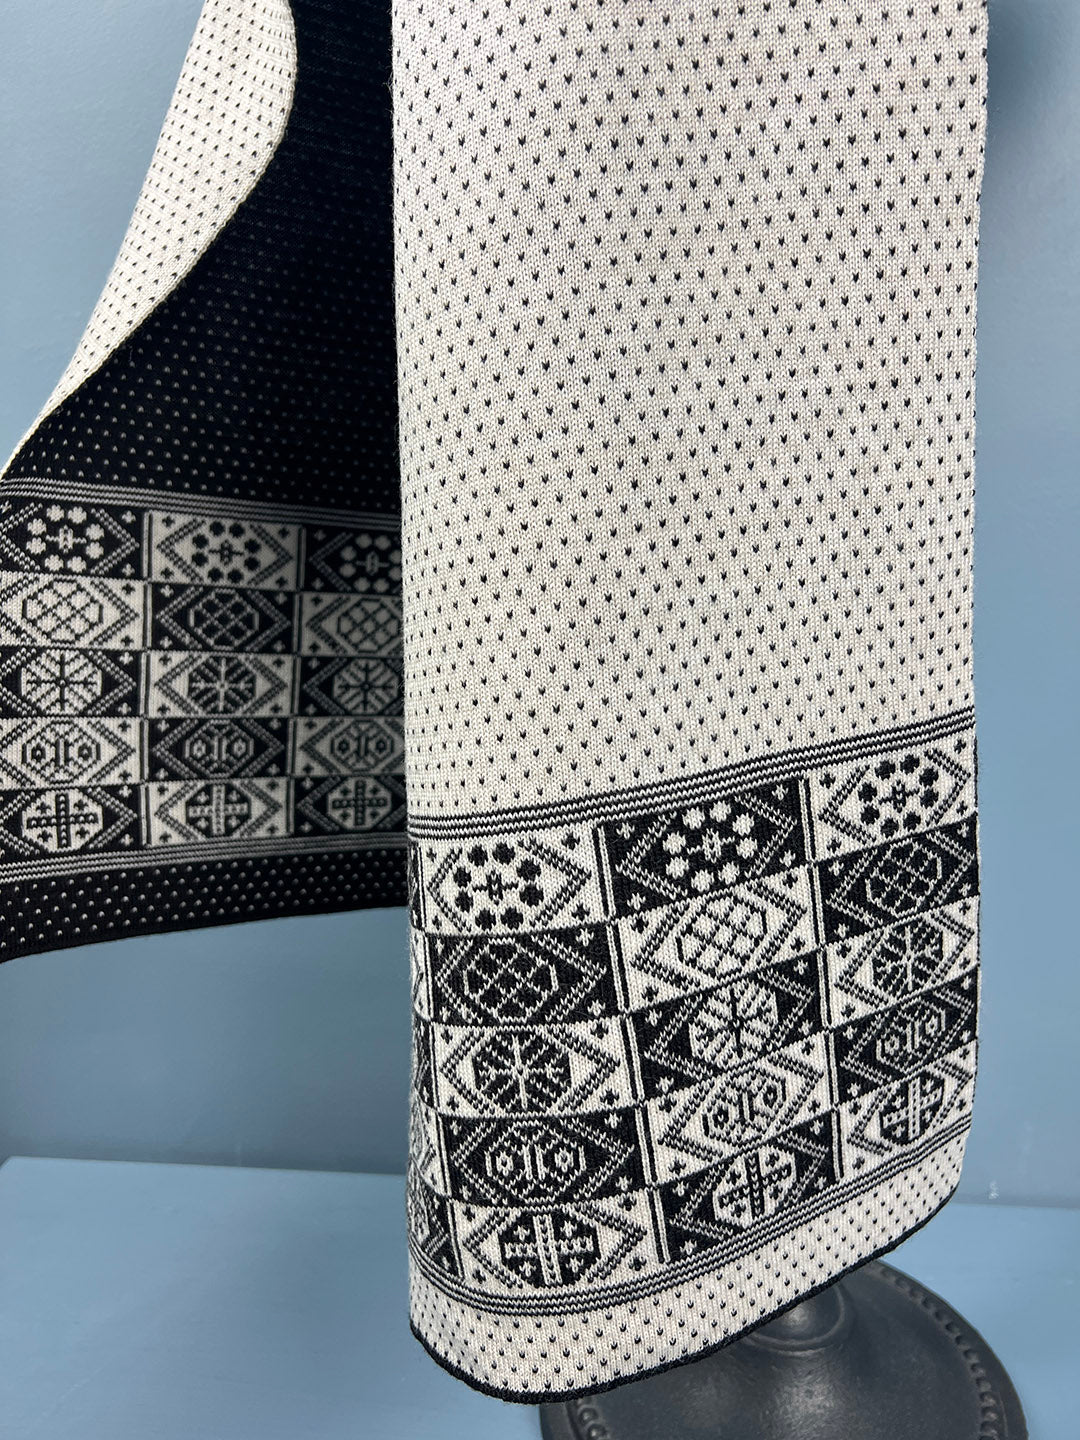 reversible Fair Isle scarf is knitted by BAKKA in superfine merino wool with polka dot pattern